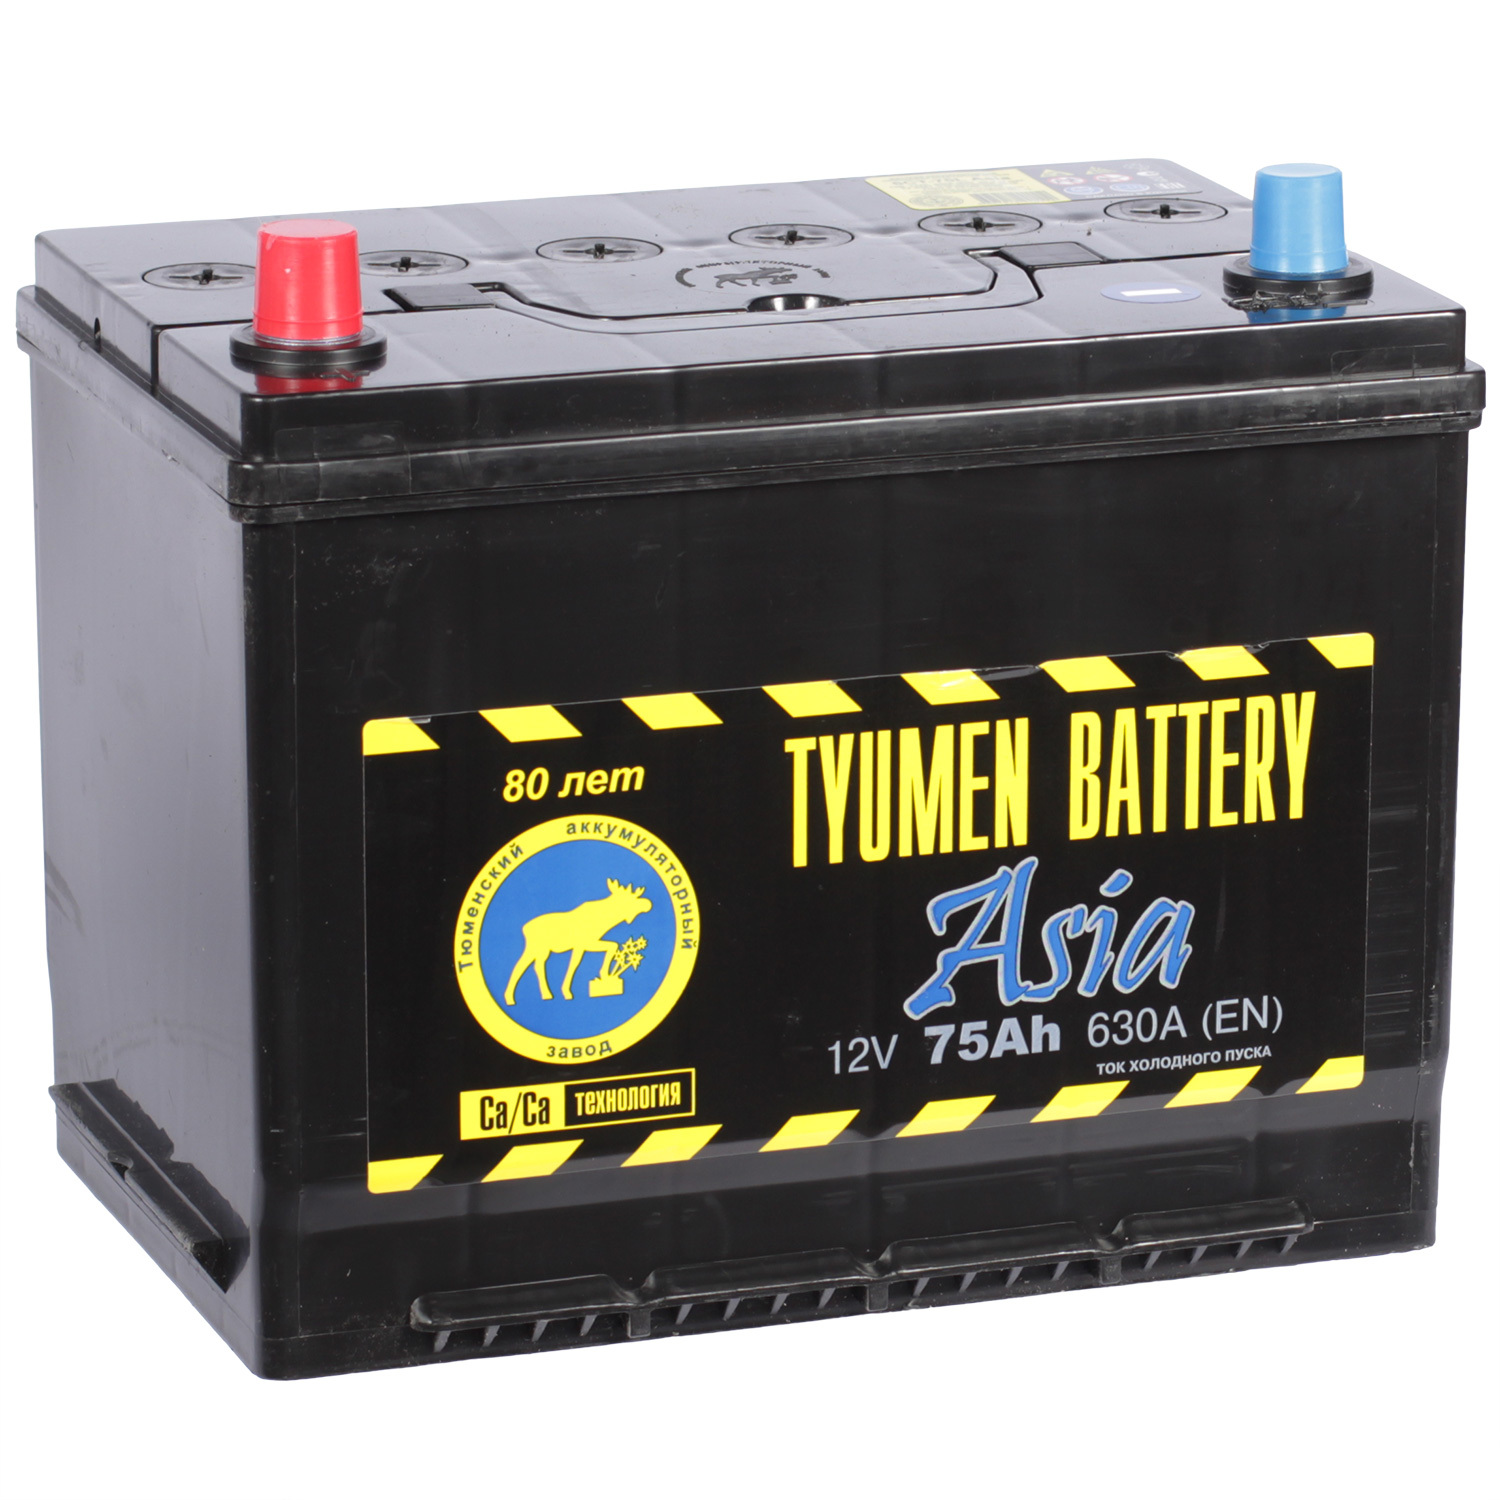 Tyumen Battery Автомобильный аккумулятор Tyumen Battery Asia 75 Ач прямая полярность D26R tyumen battery автомобильный аккумулятор tyumen battery 61 ач прямая полярность lb2